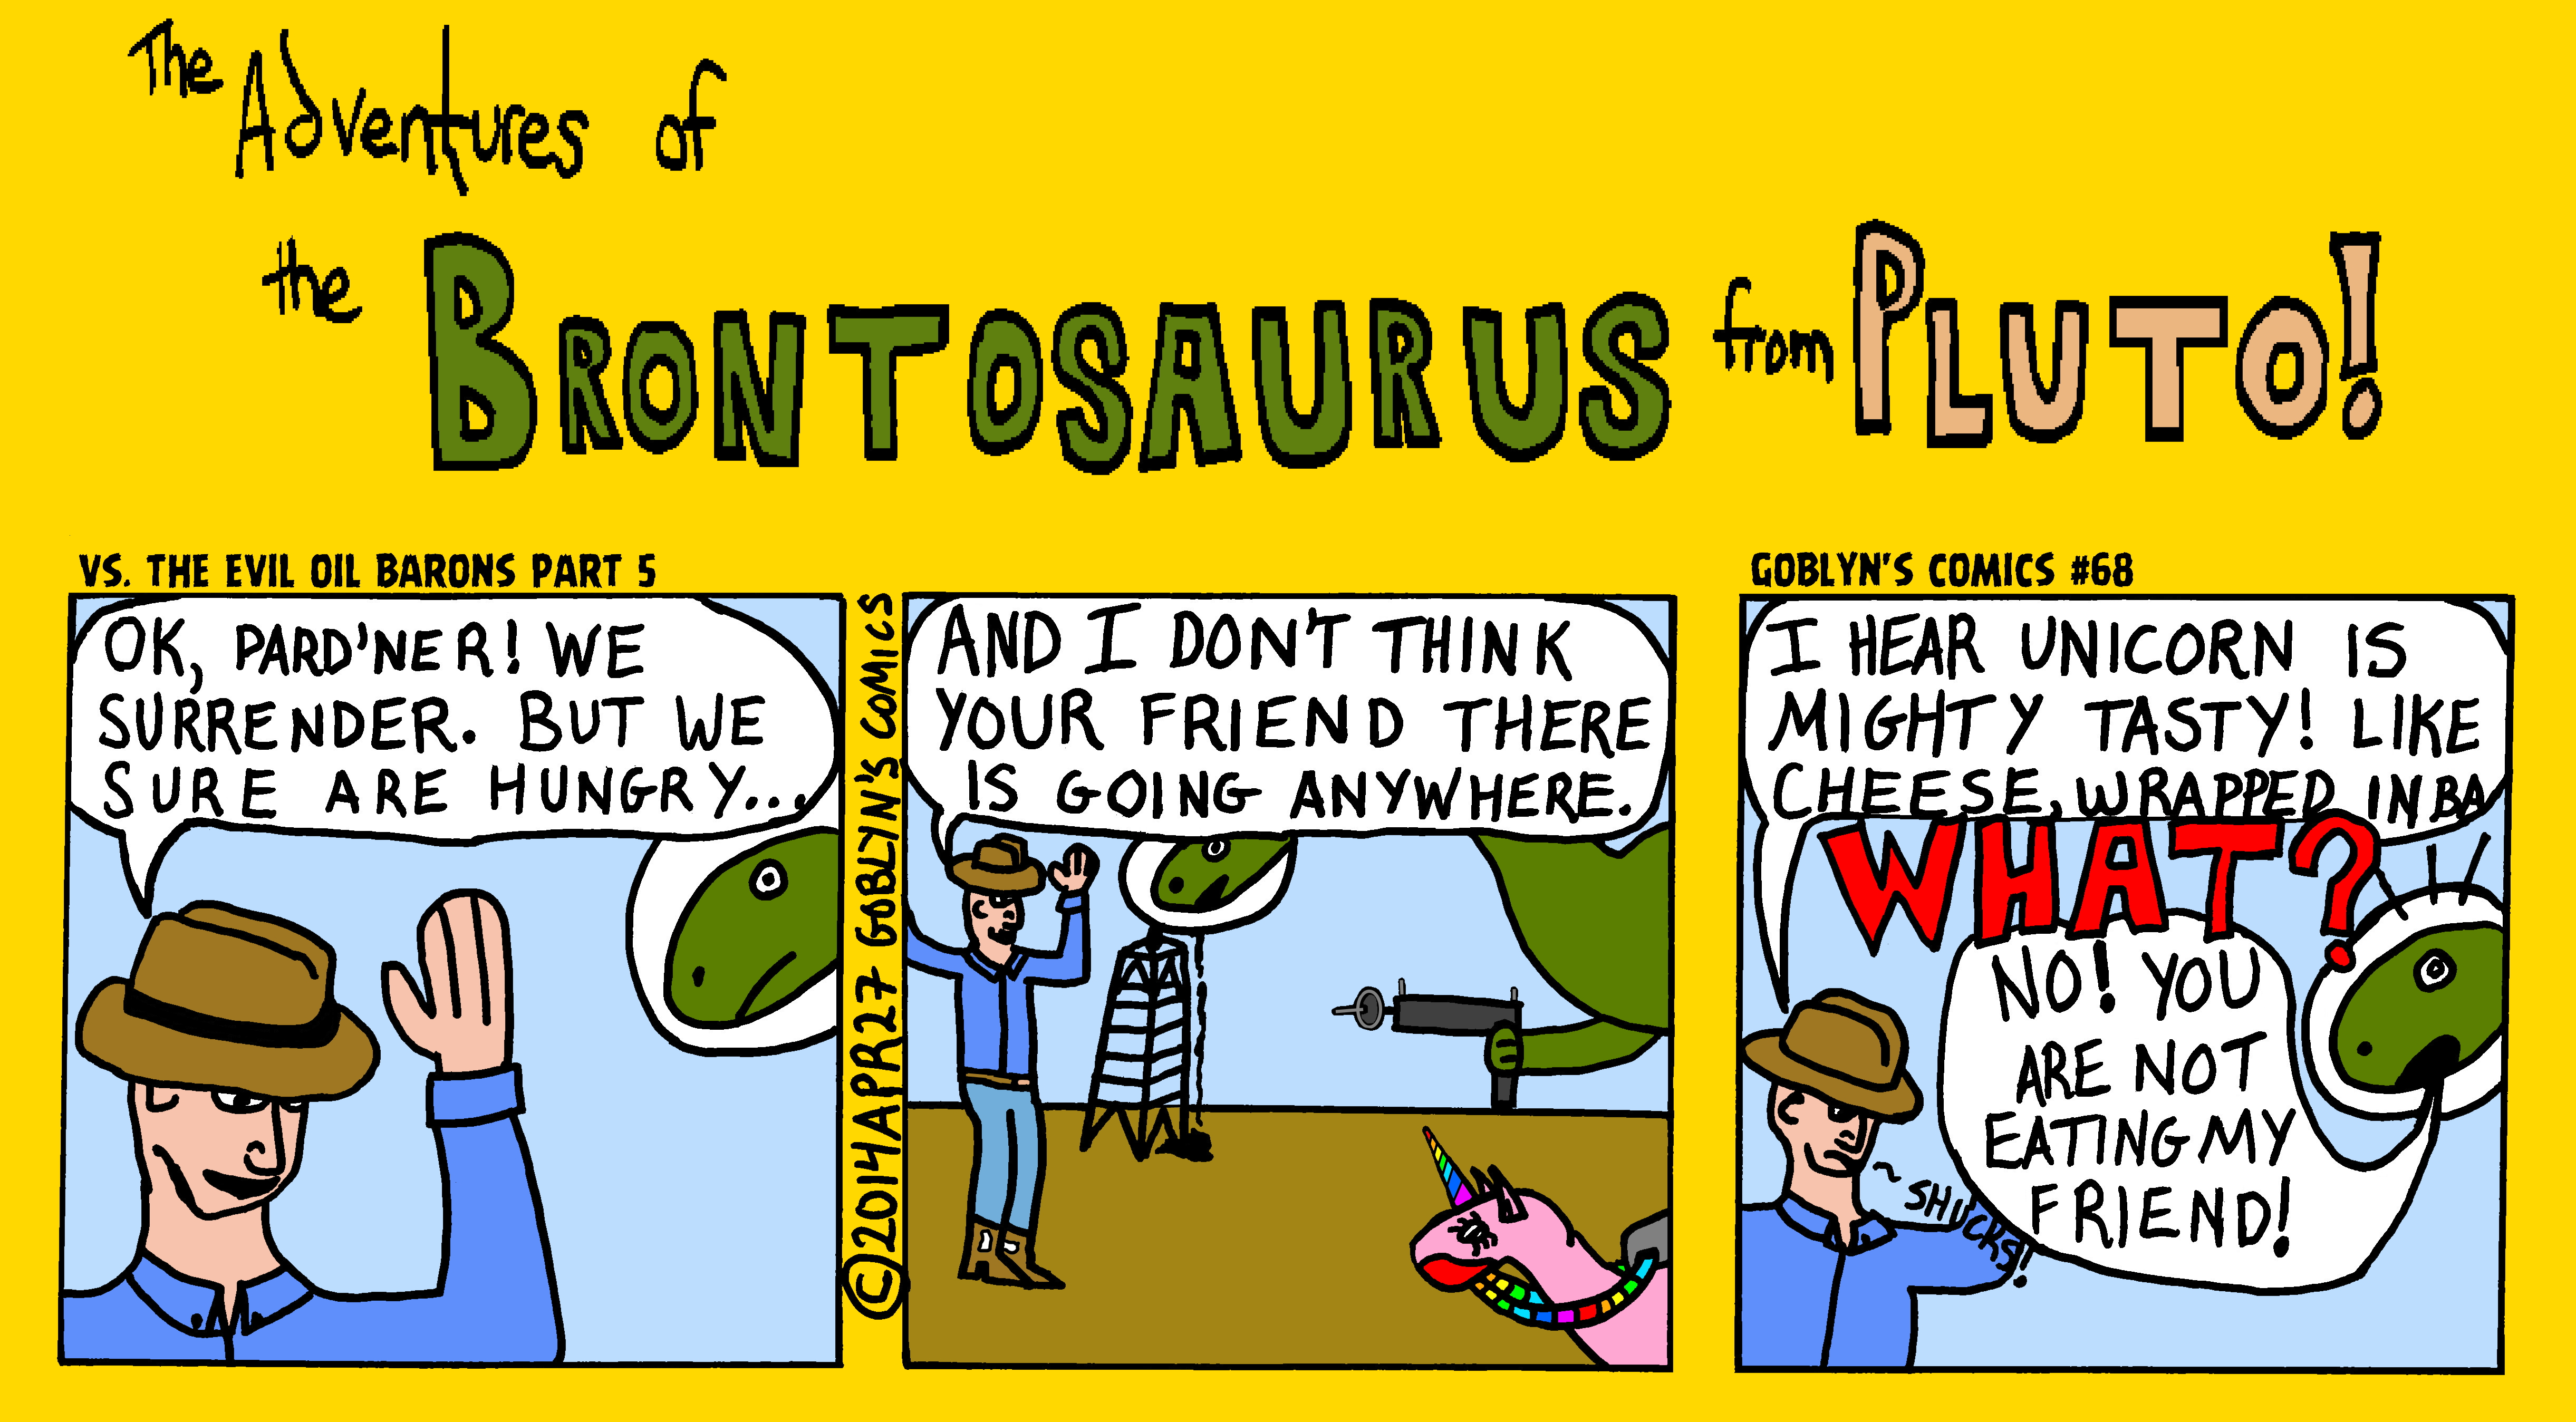 Brontosaurus from Pluto